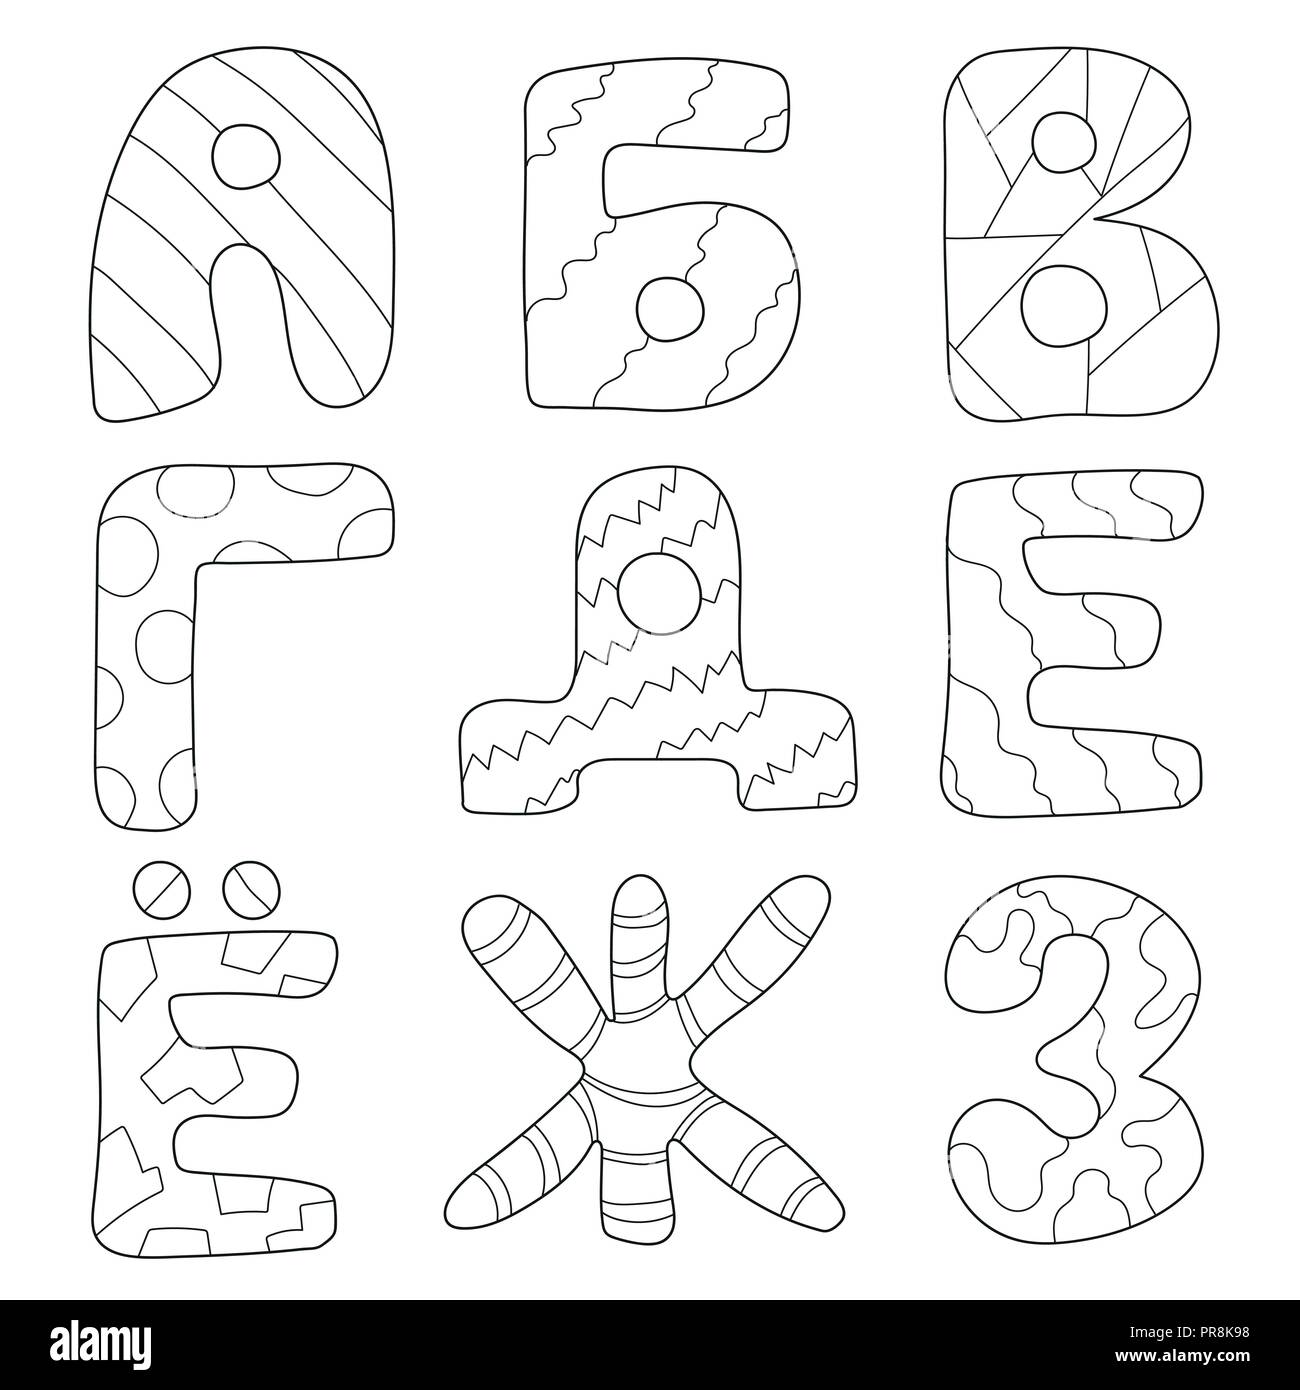 Cartoon alphabet for children design. Russian letters. for kids